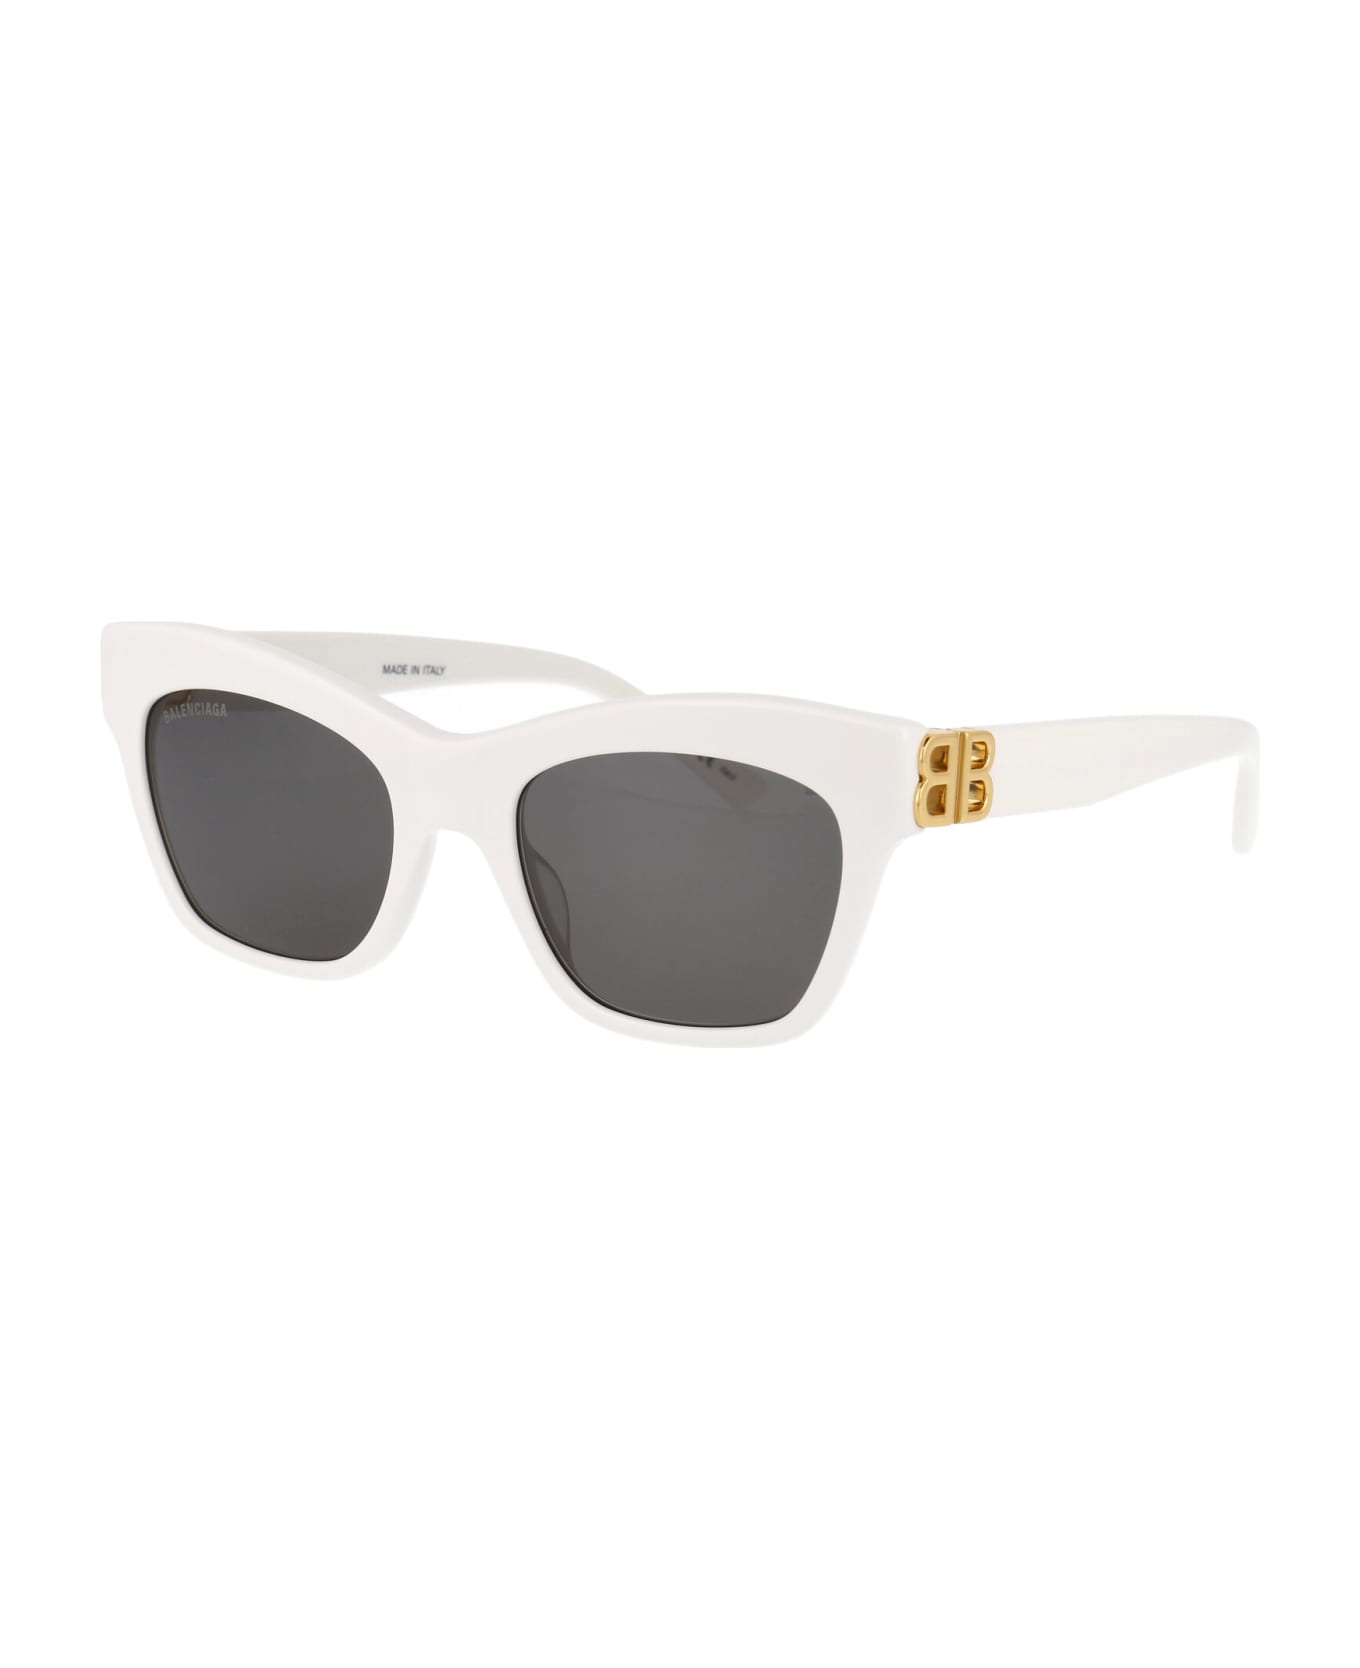 Balenciaga Eyewear Bb0132s Sunglasses - 006 WHITE GOLD GREY